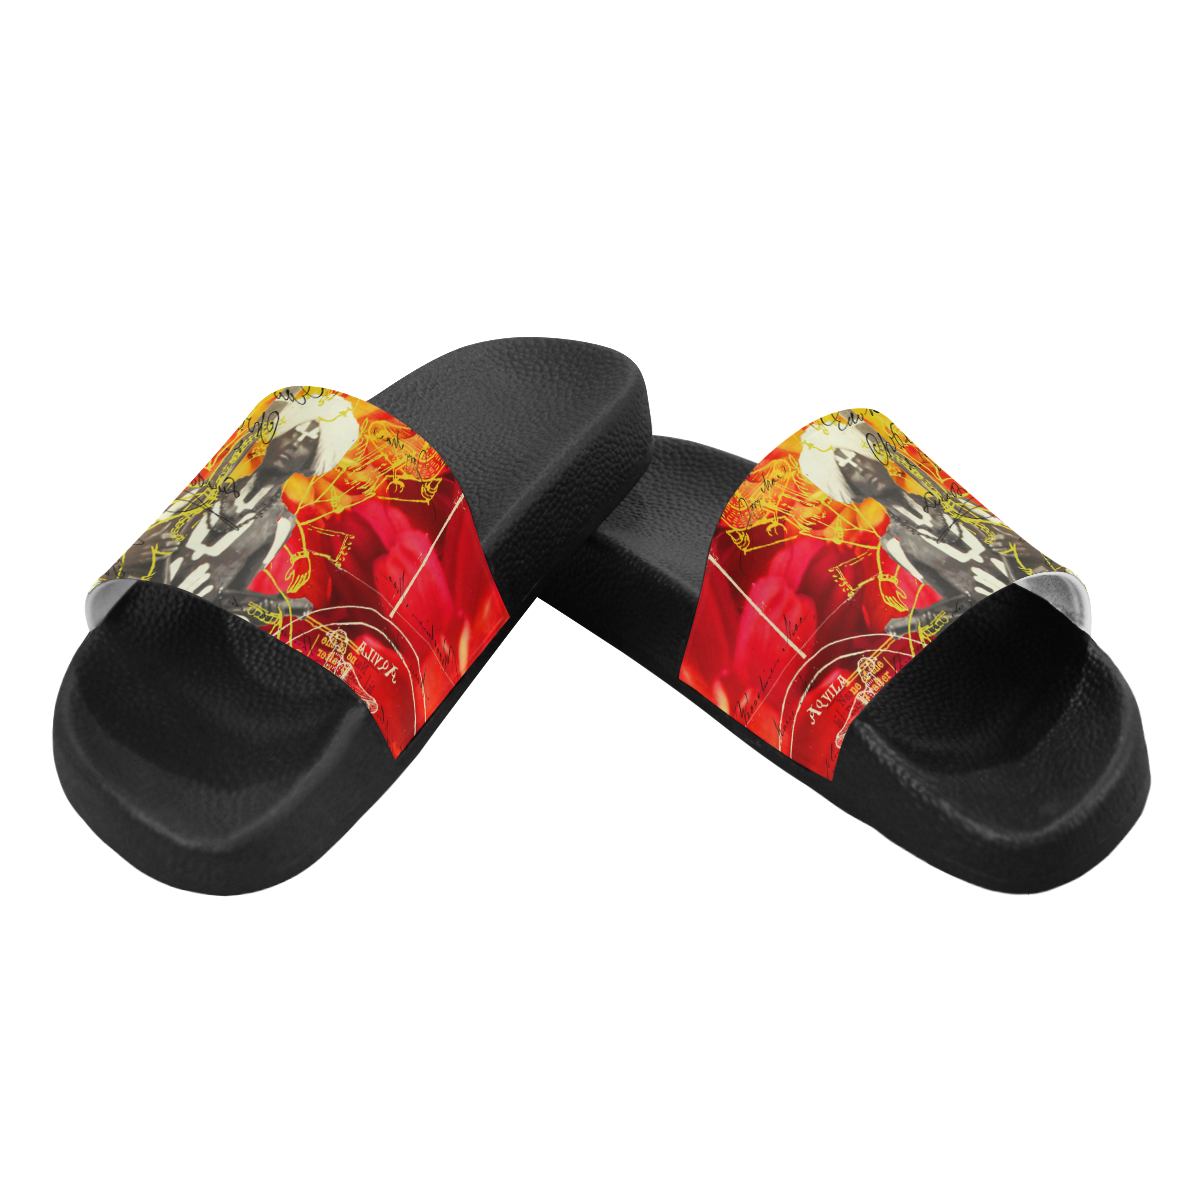 THE SITAR PLAYER Men's Slide Sandals (Model 057)